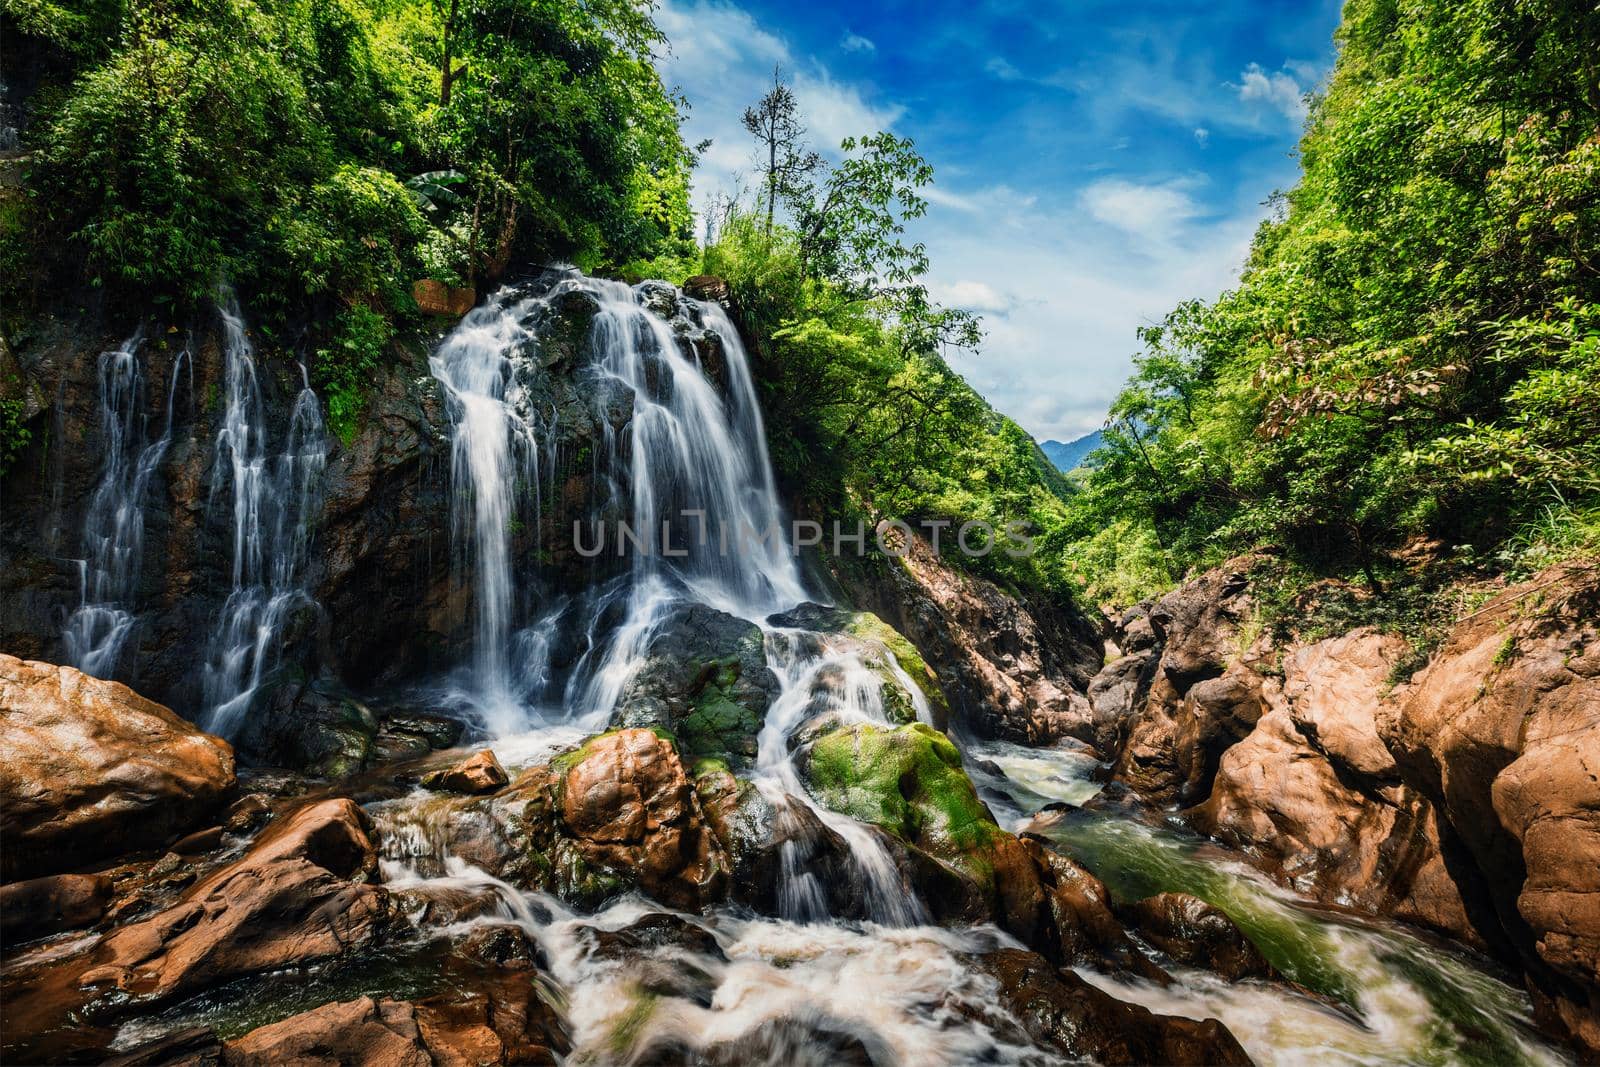 Waterfal near Cat Cat Village near (Sapa) Sa Pa, Vietnam - popular tourist trekking destination